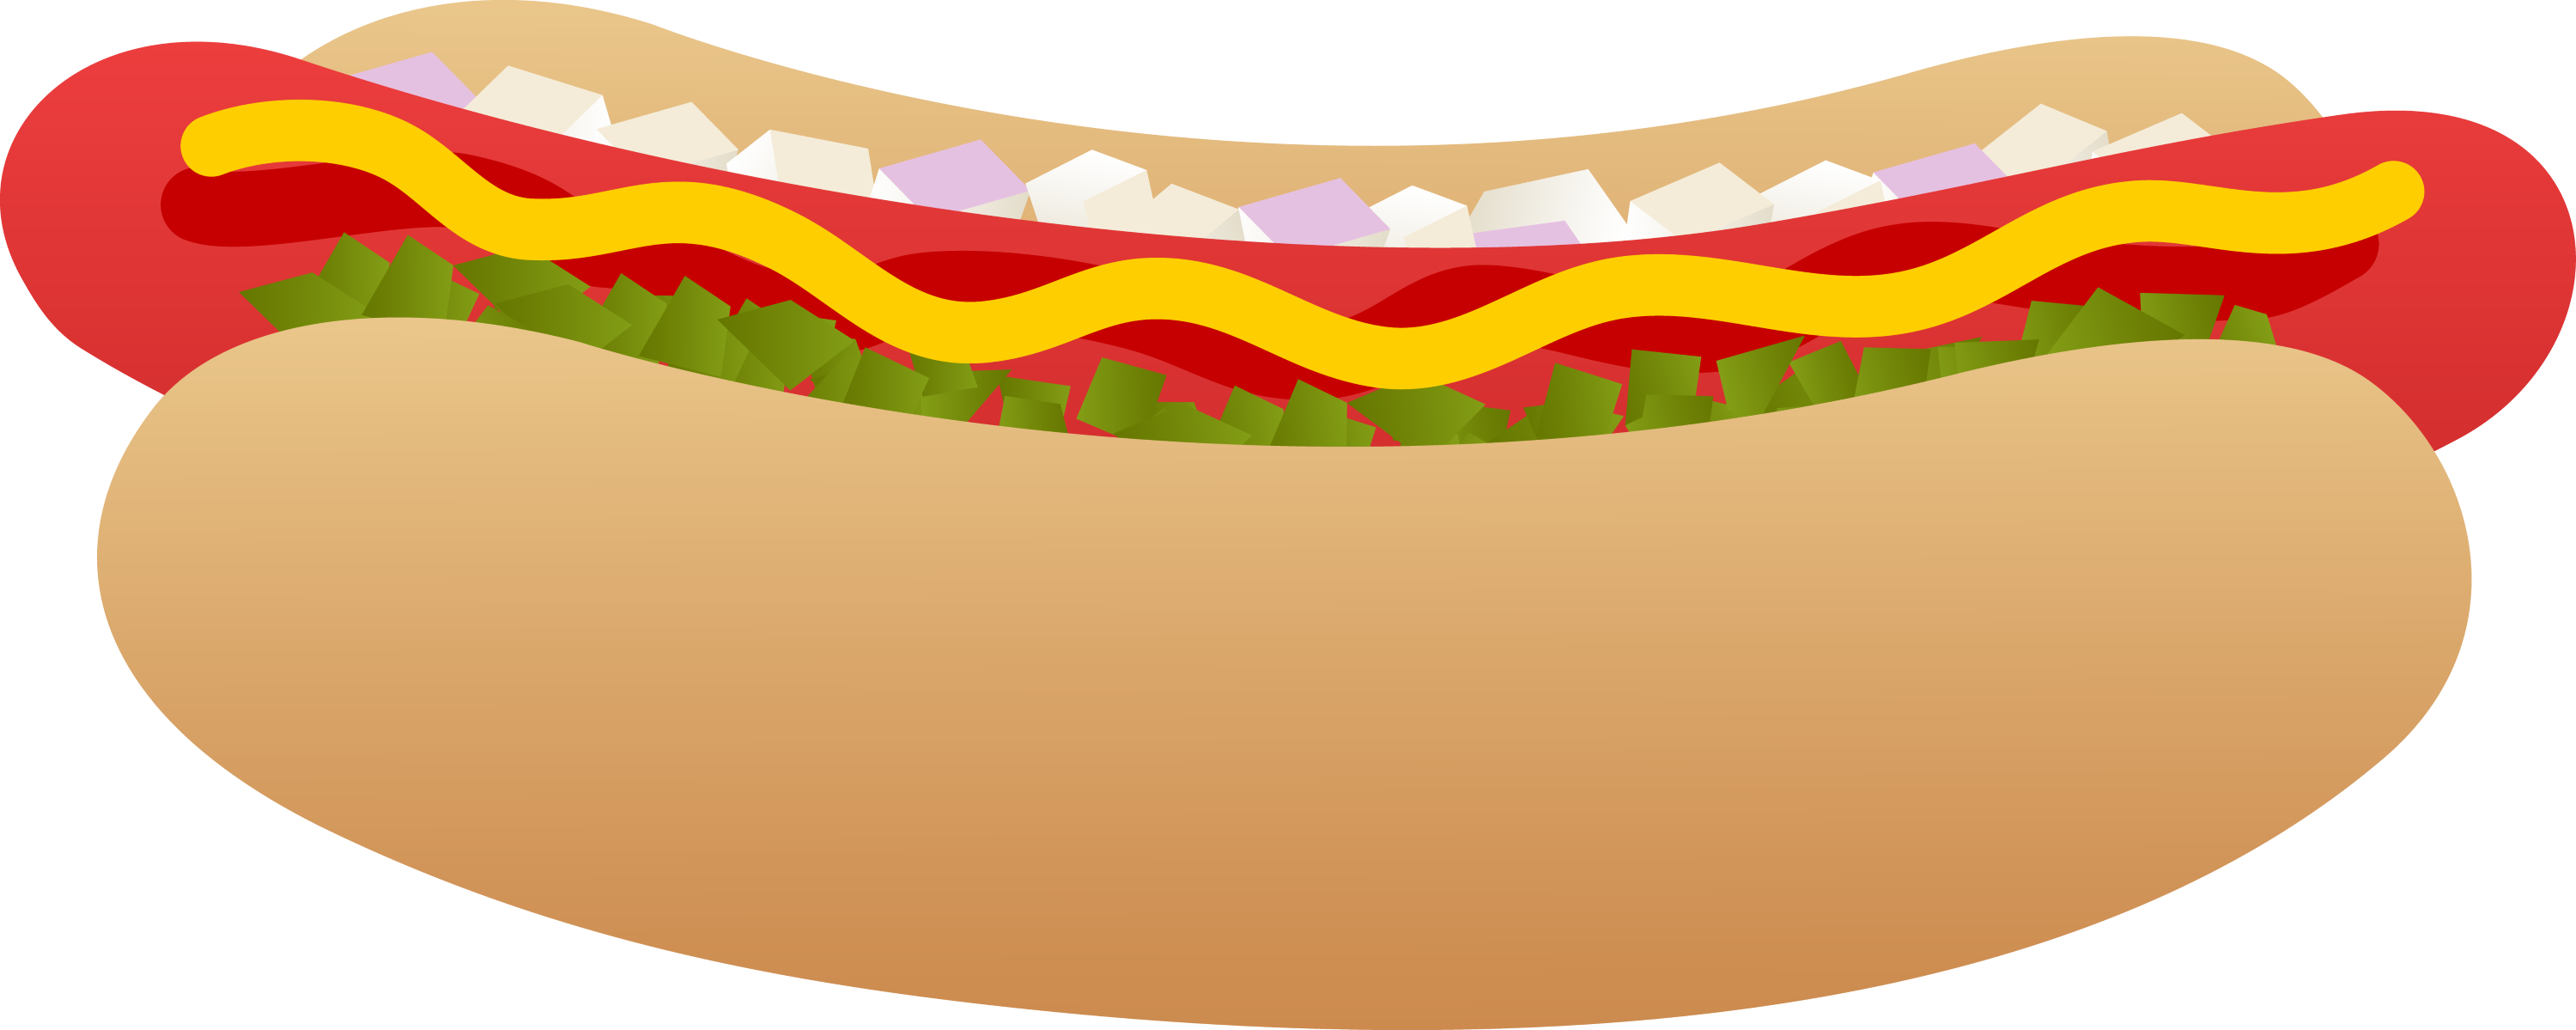 free clipart hot dogs hamburgers - photo #32